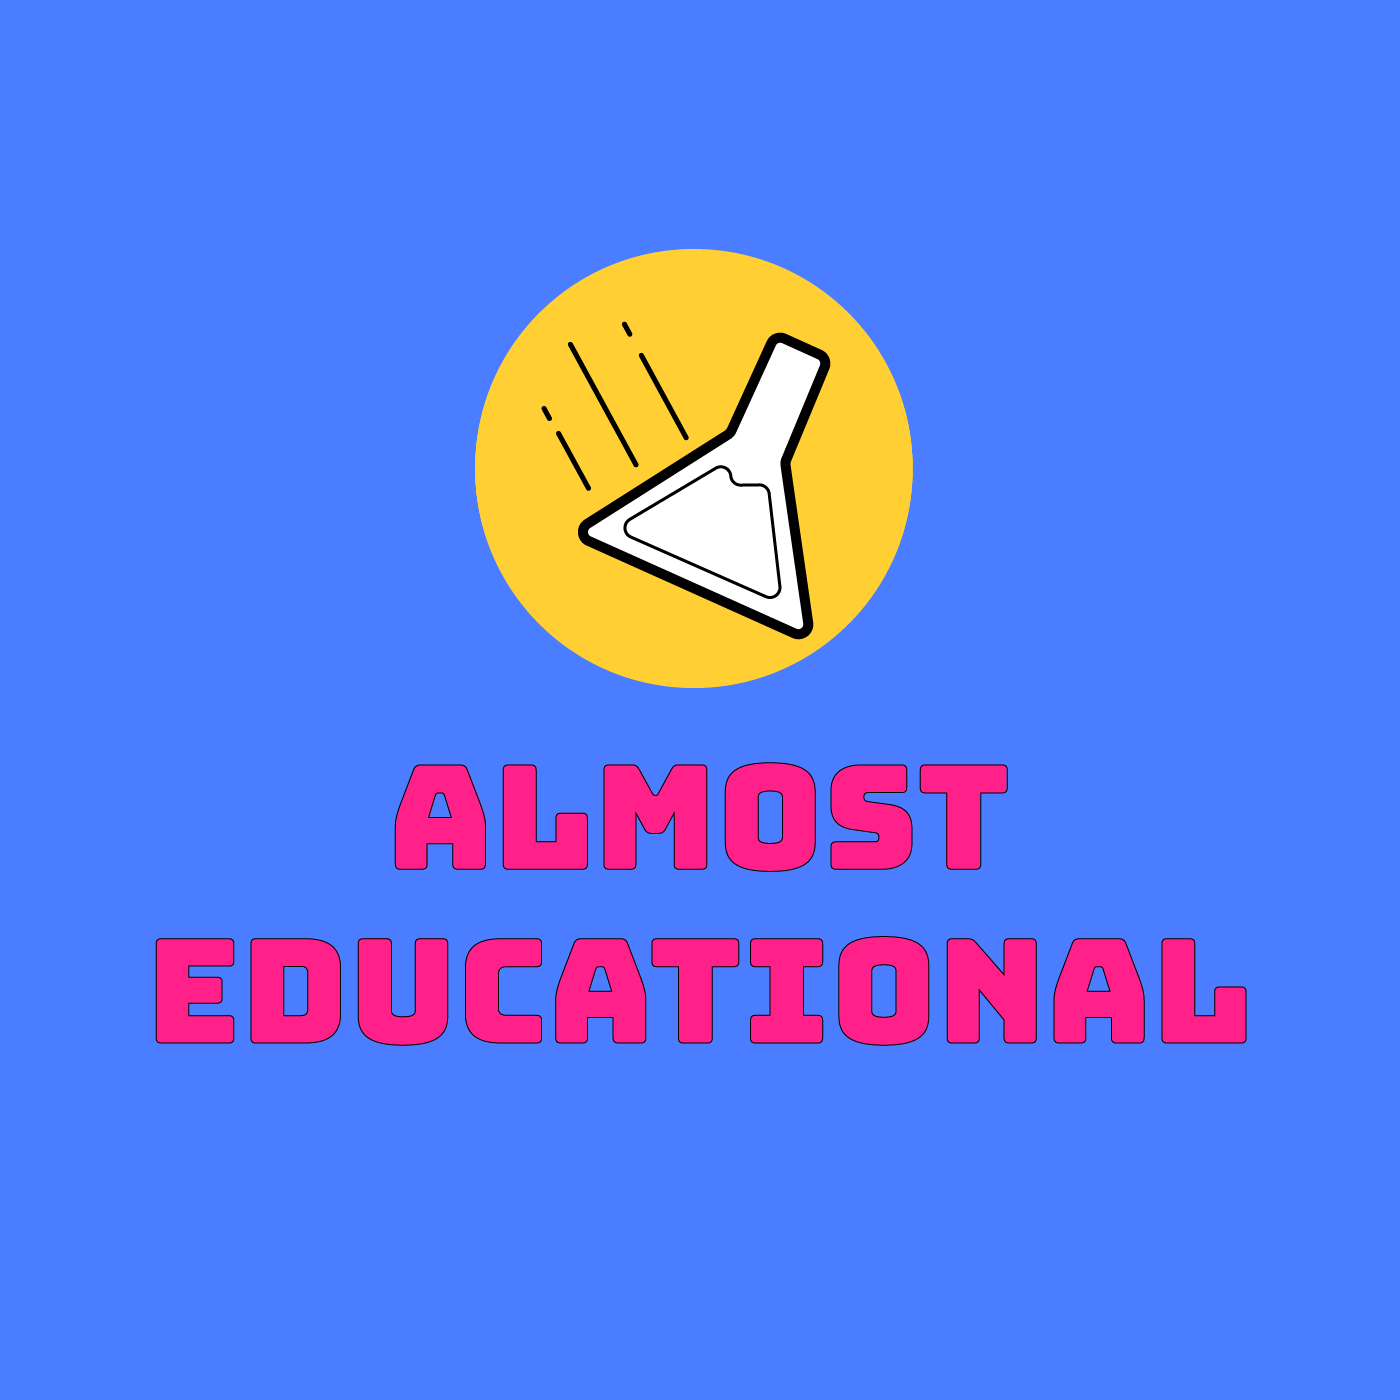 Almost Educational Logo